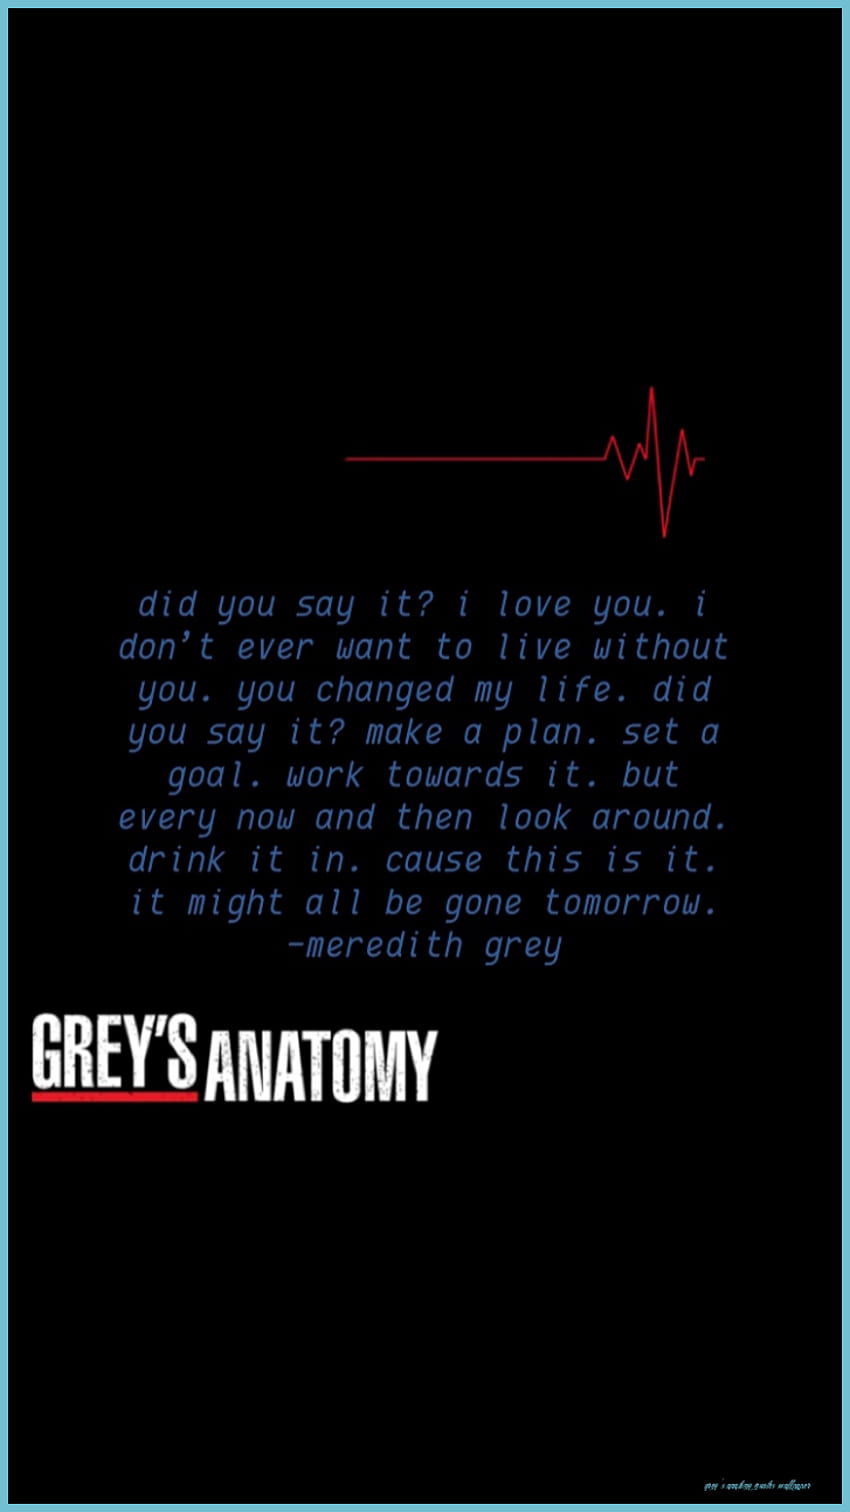 Greys anatomy quotes and sayings - Grey's Anatomy